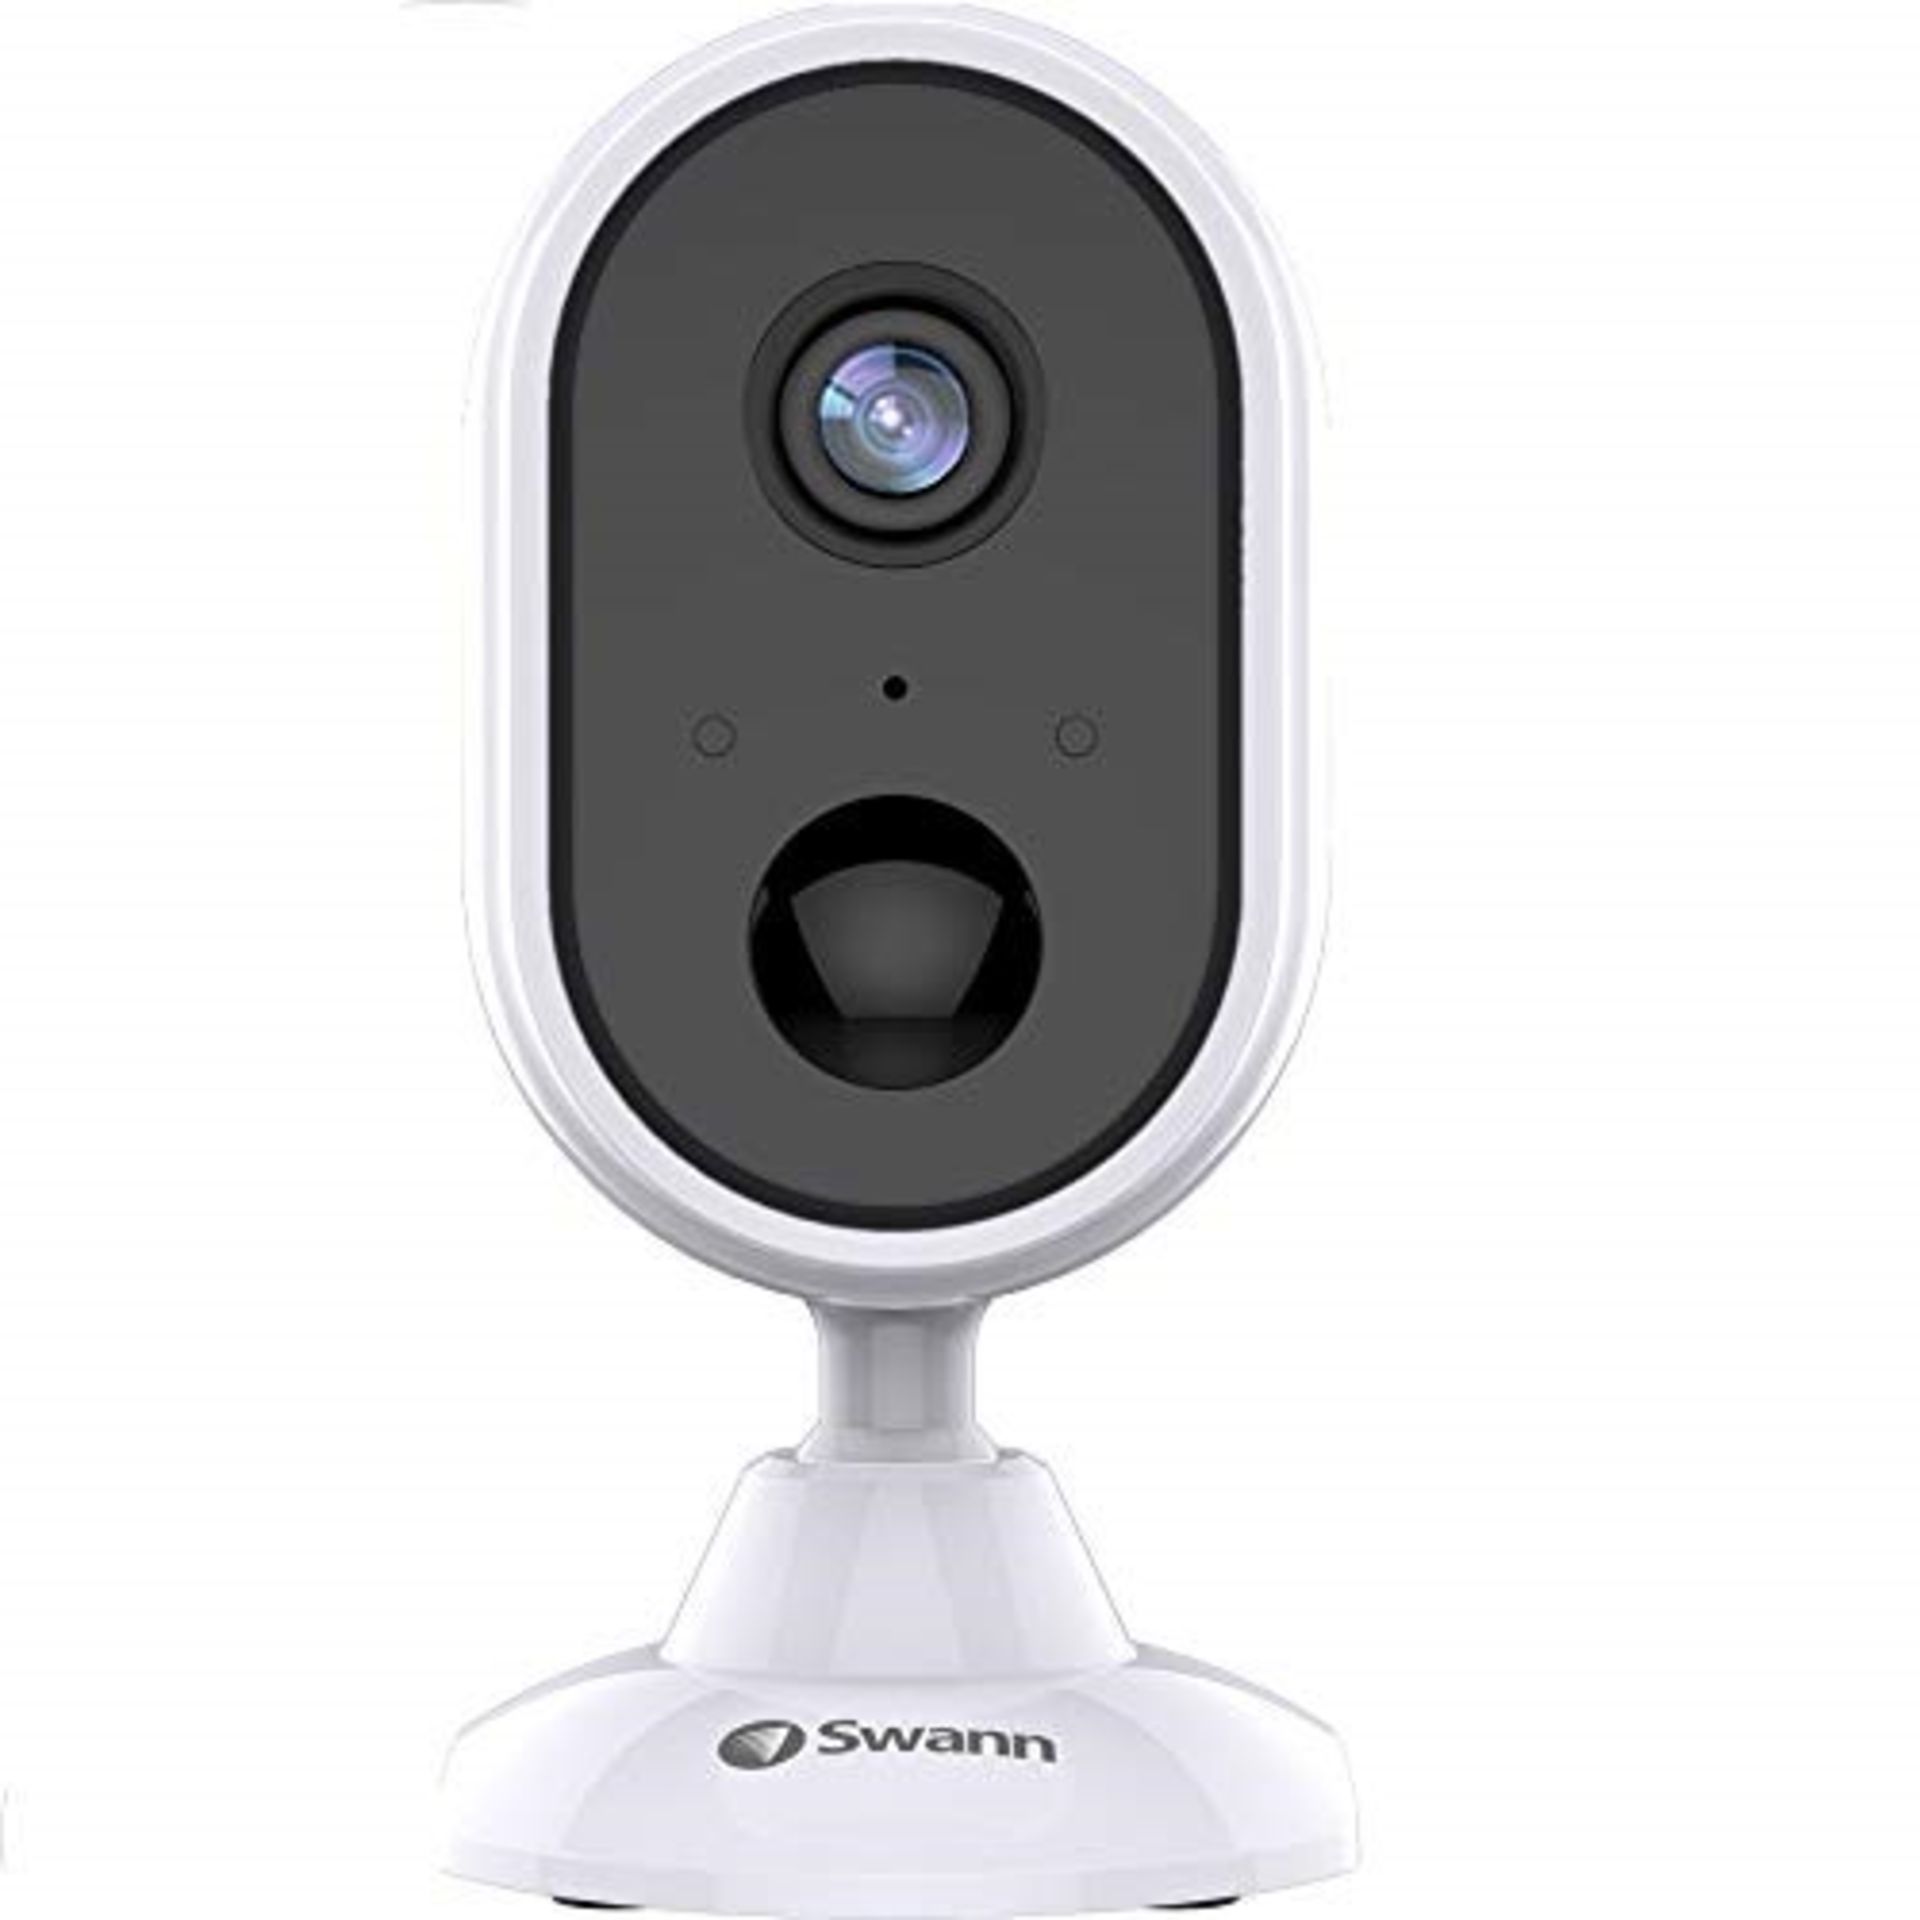 Swann Alert Indoor HD Security Camera with 2-Way